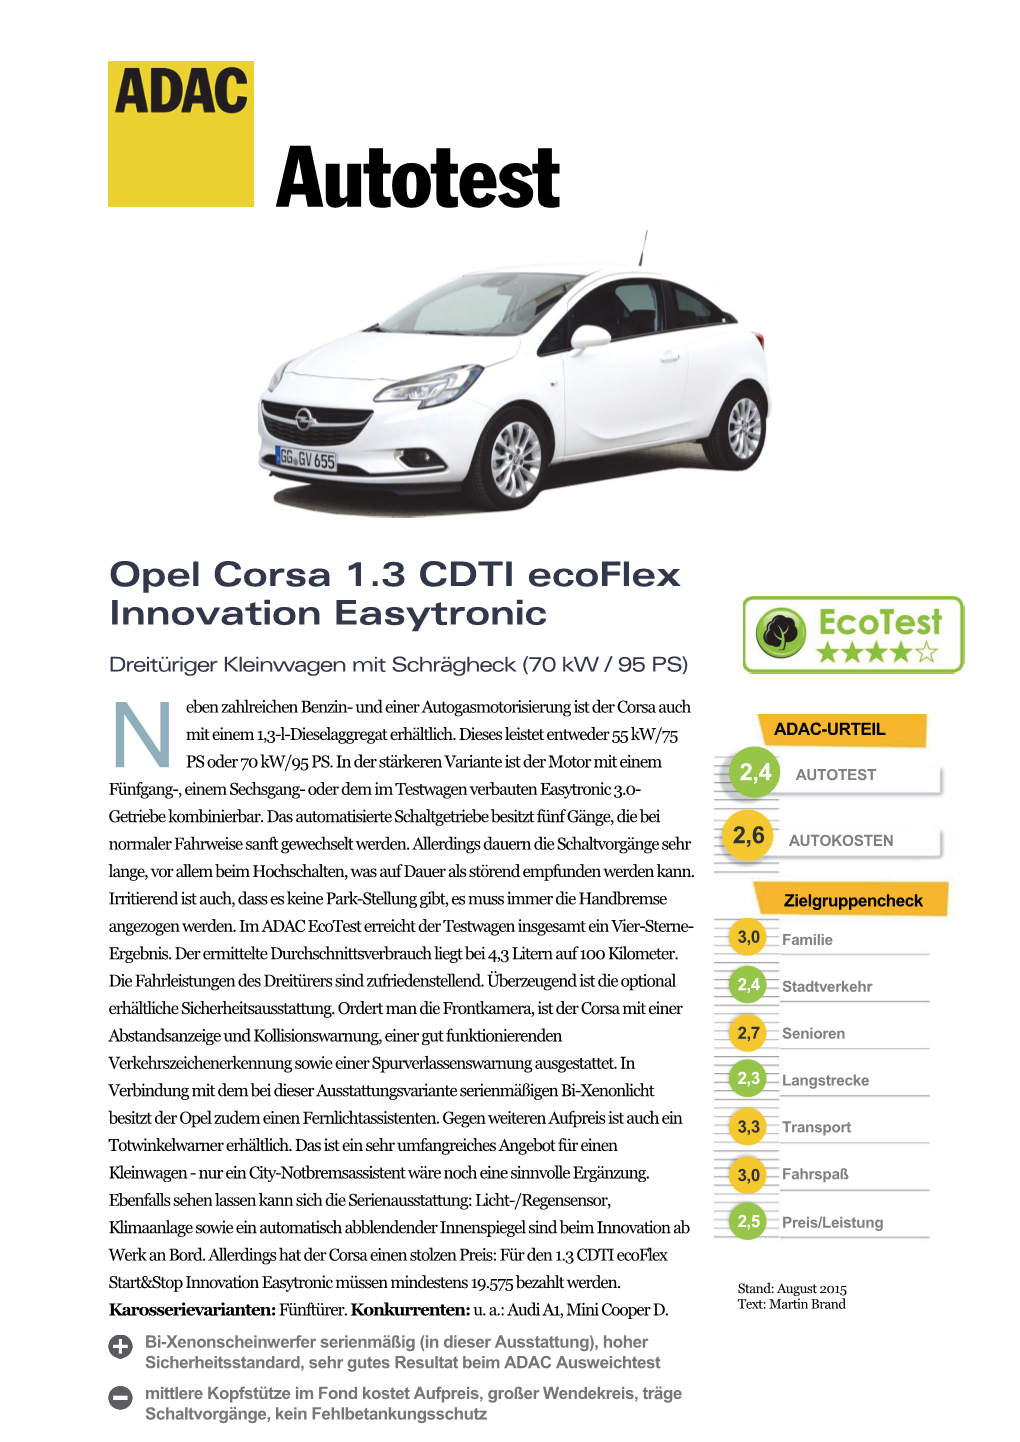 Opel Corsa 1.3 CDTI Ecoflex Innovation Easytronic